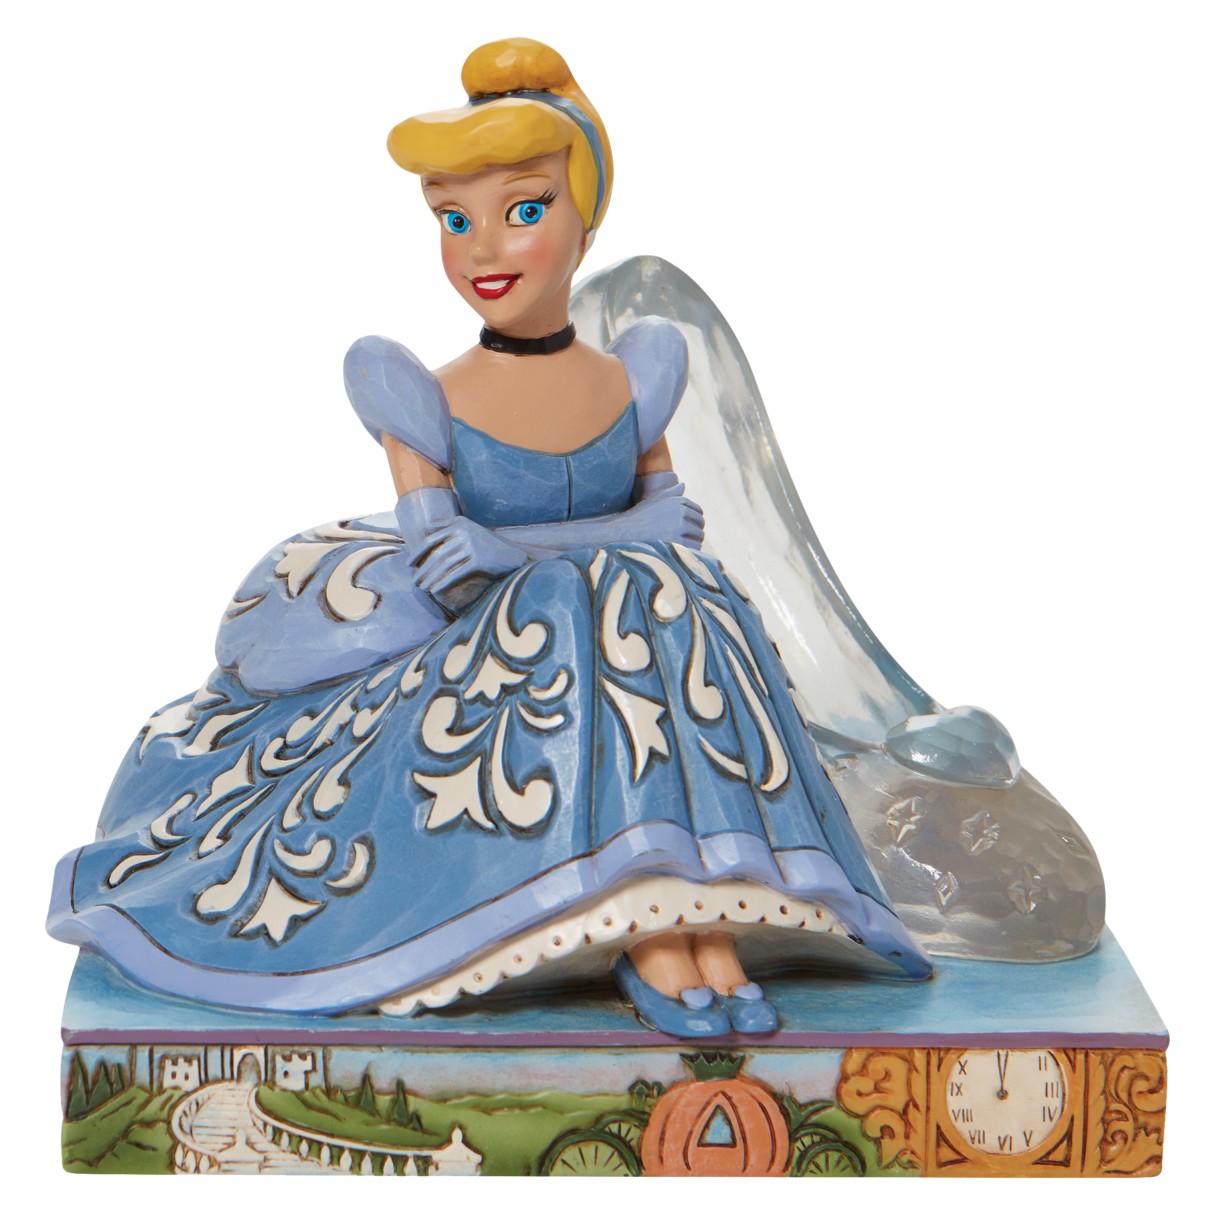 Cinderella Glass Slipper Figure by Jim Shore